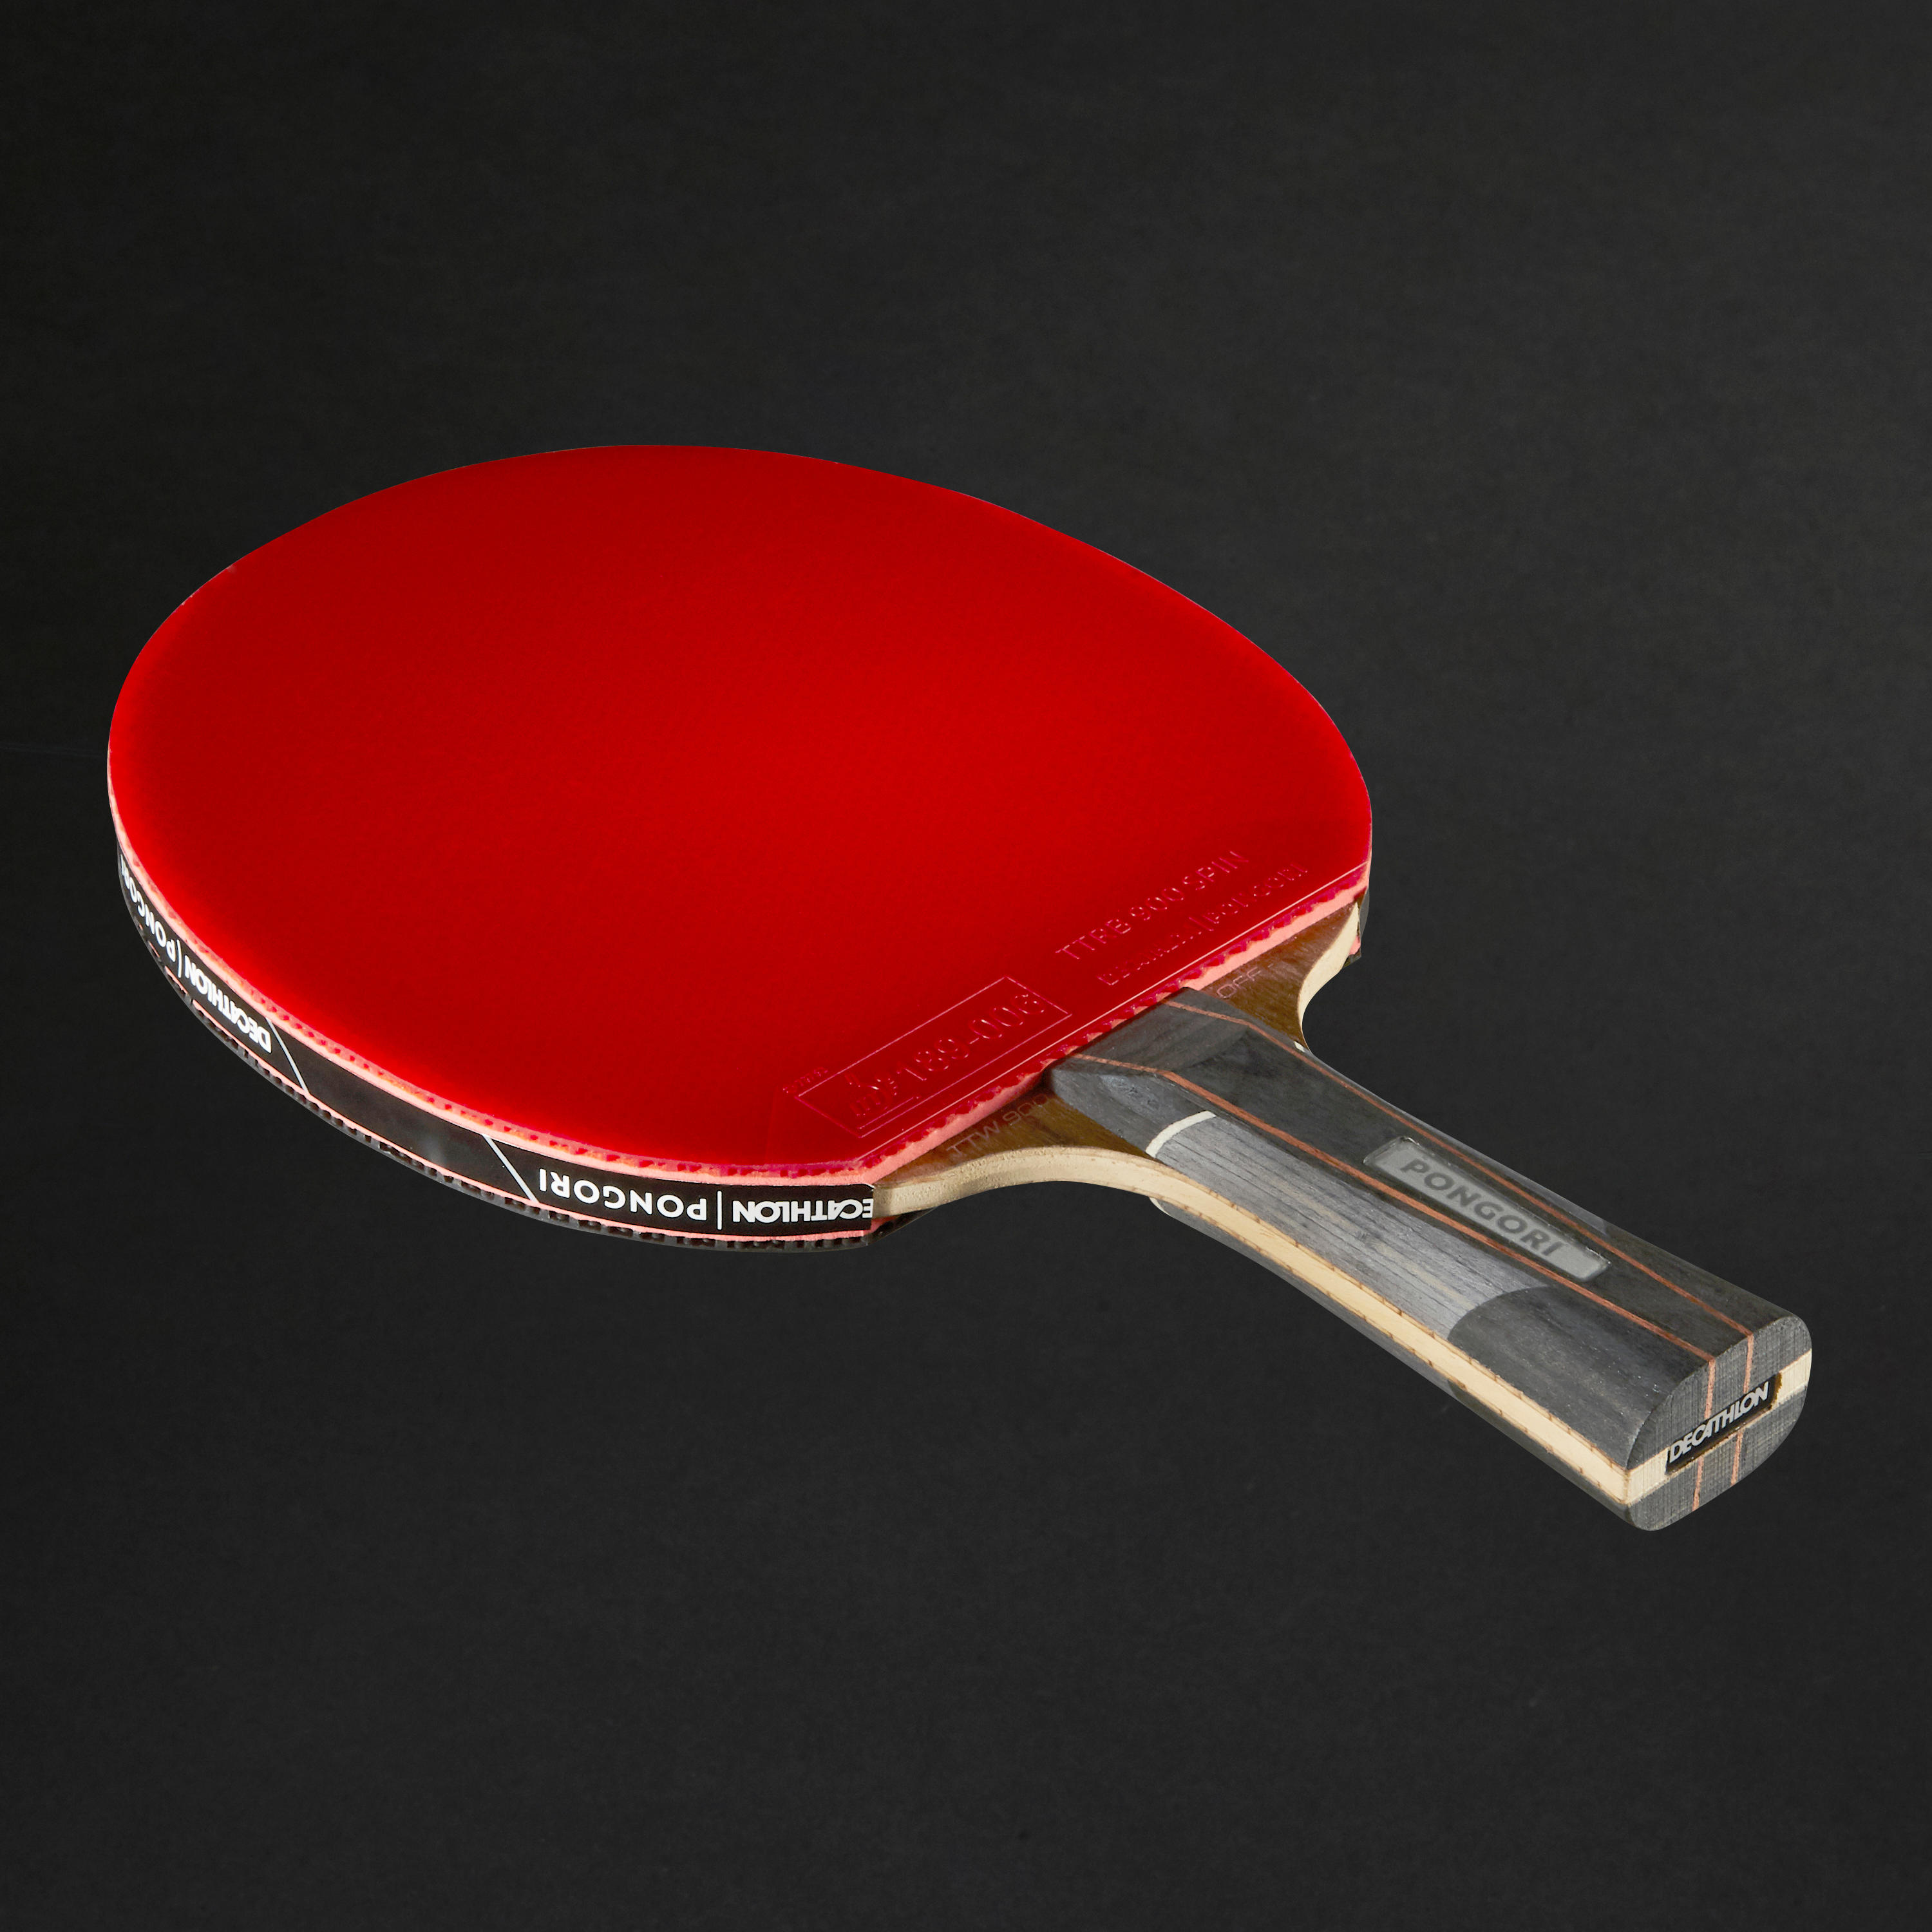 Club Table Tennis Paddle - TTR 900 Spin - PONGORI